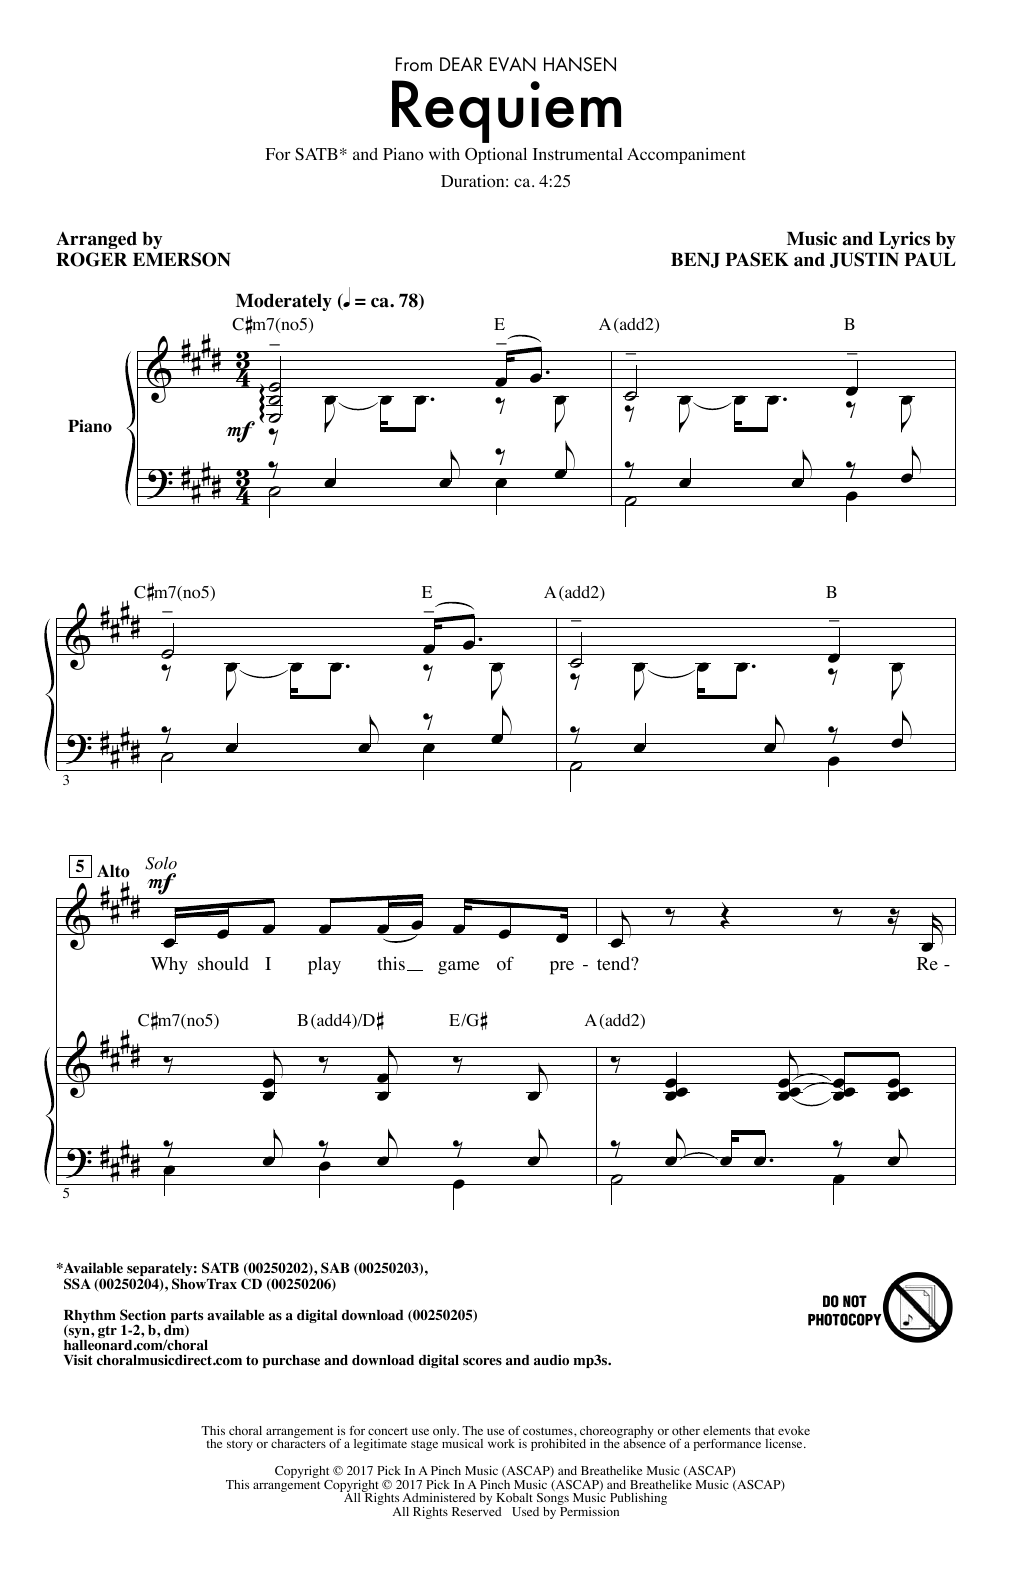 Pasek & Paul Requiem (from Dear Evan Hansen) (arr. Roger Emerson) sheet music notes and chords arranged for SATB Choir